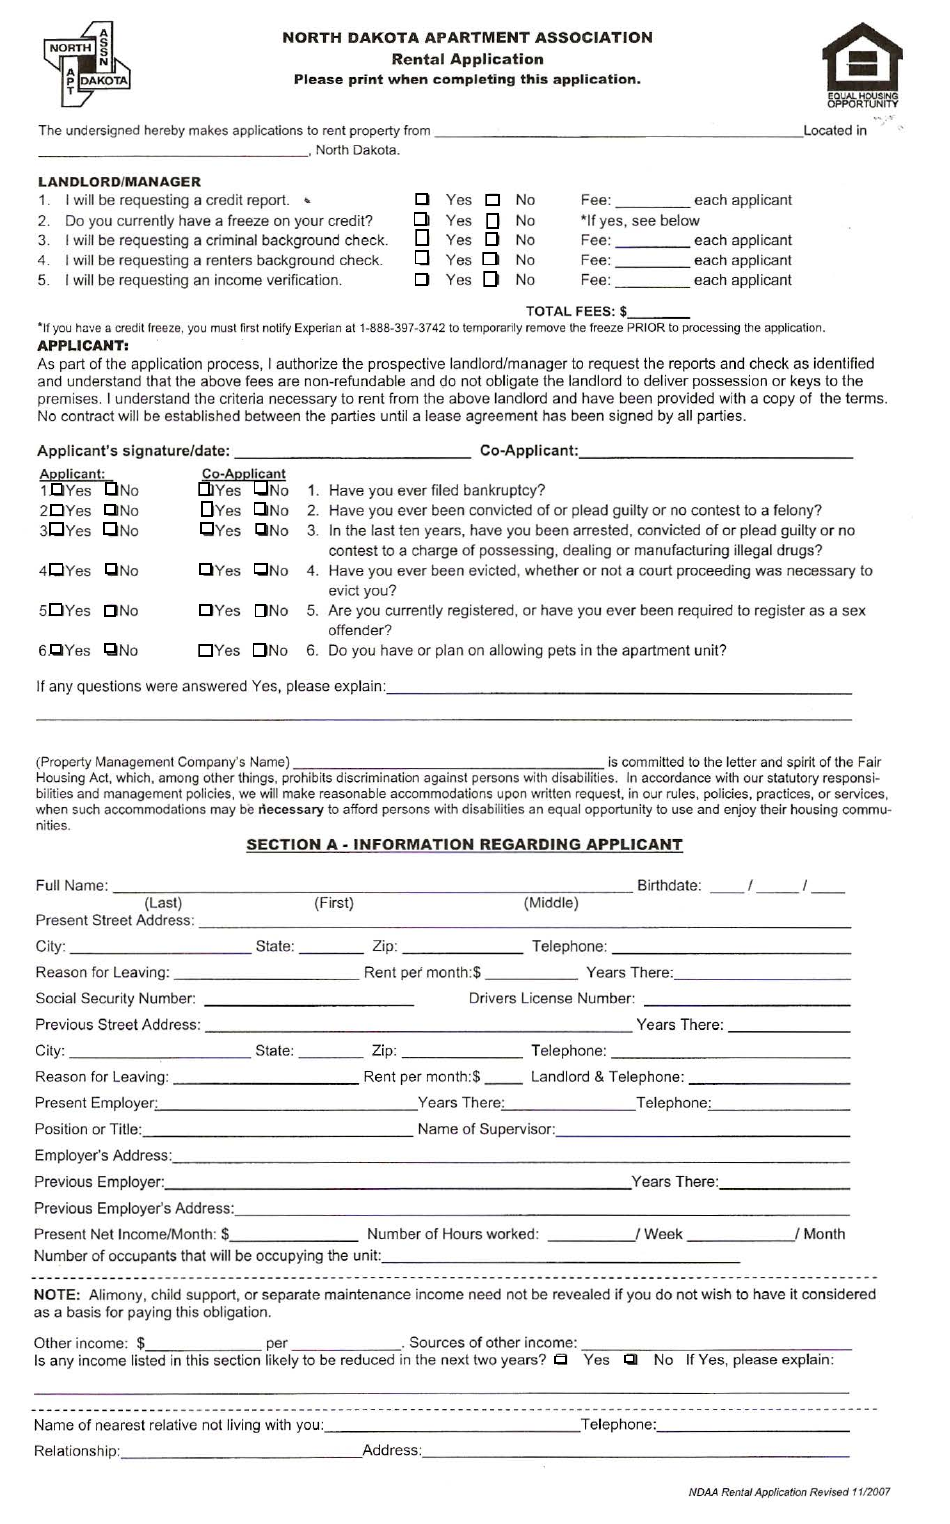 Rental Application Form - North Dakota Apartment Association - North Dakota, Page 1